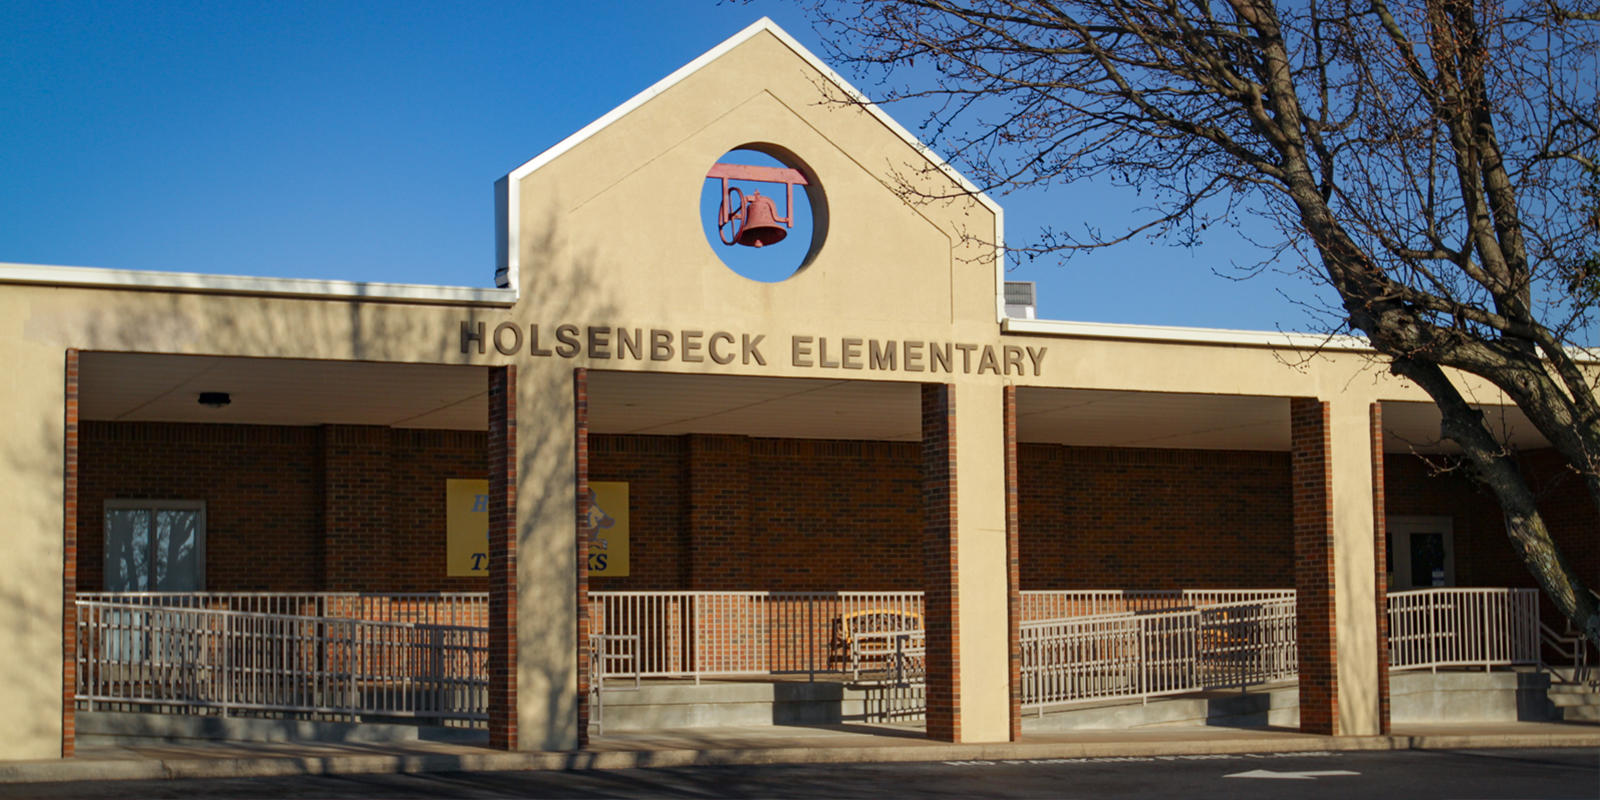 Holsenbeck Elementary School outside